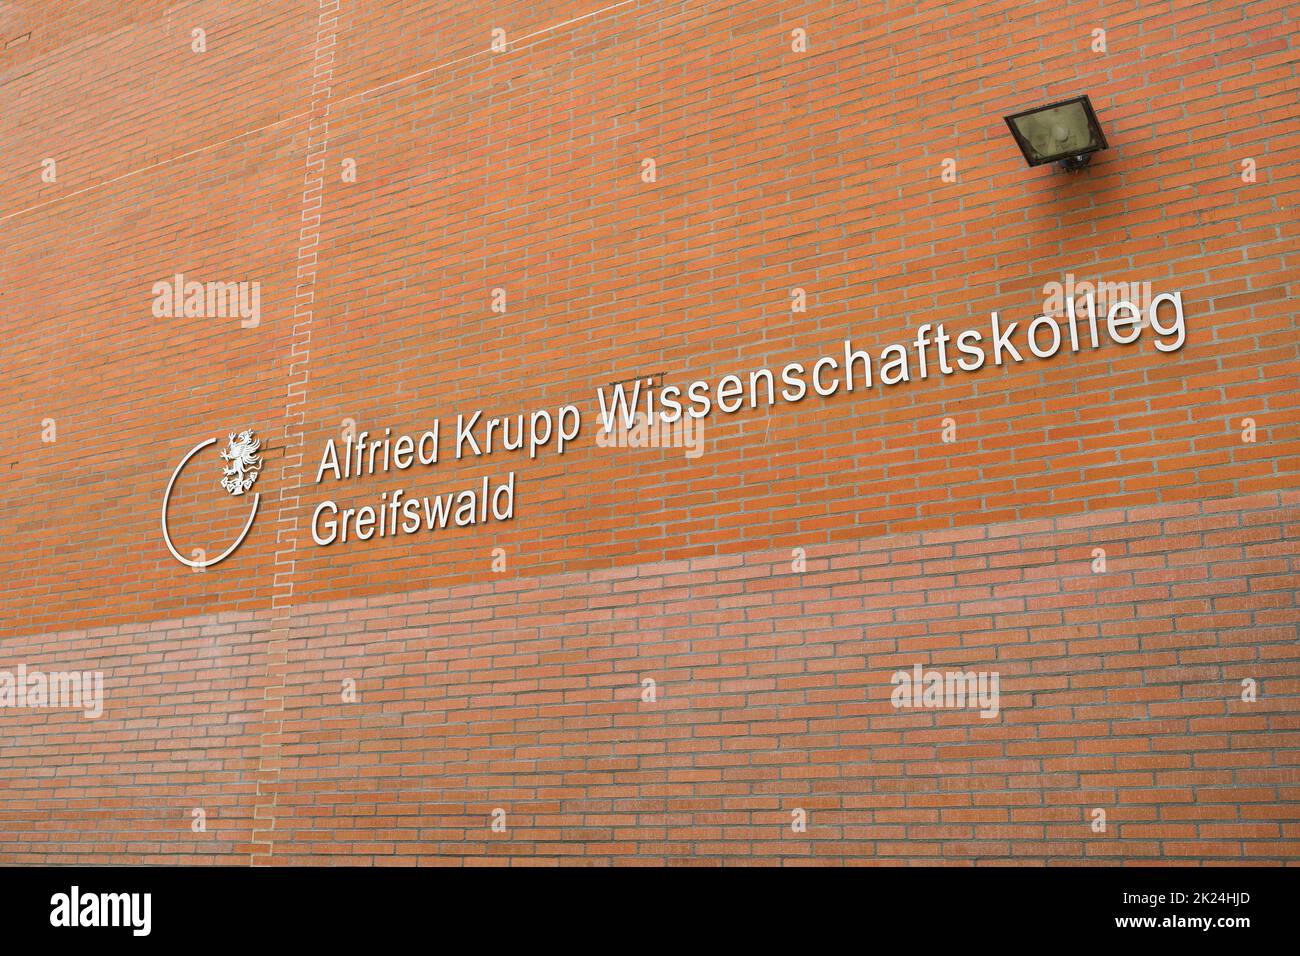 GREIFSWALD, GERMANY - JULY 31, 2021: Alfried Krupp Institute for Advanced Study (in German: Alfried Krupp Wissenschaftskolleg Greifswald). Stock Photo